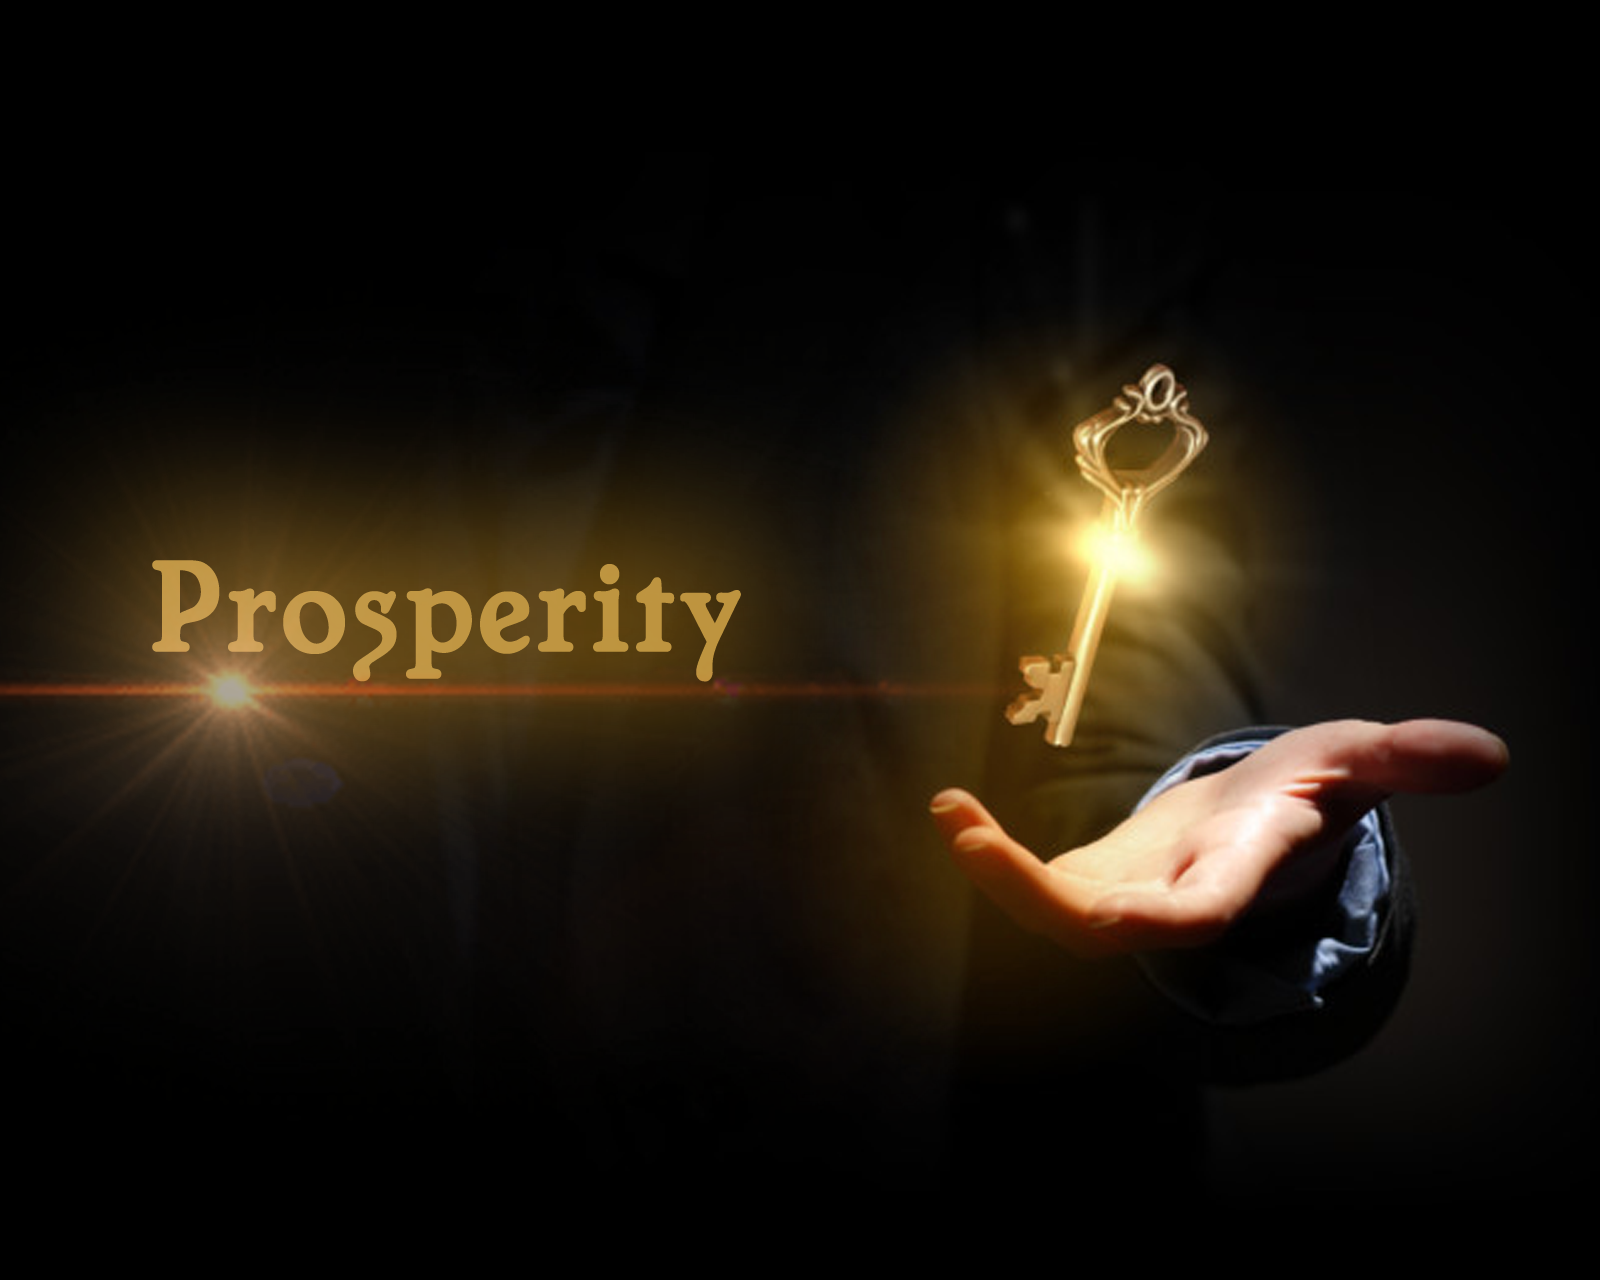 Biblical Prosperity